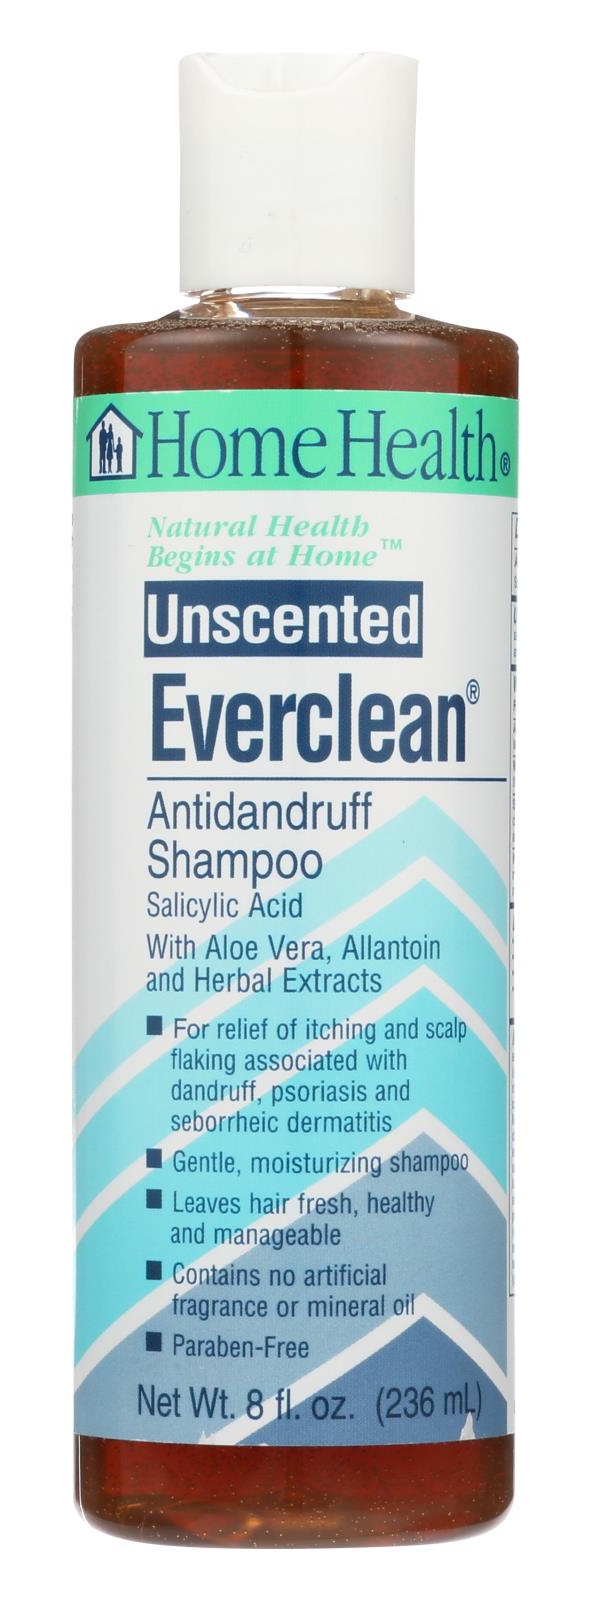 Home Health Everclean Anti-Dandruff Shampoo Unscented